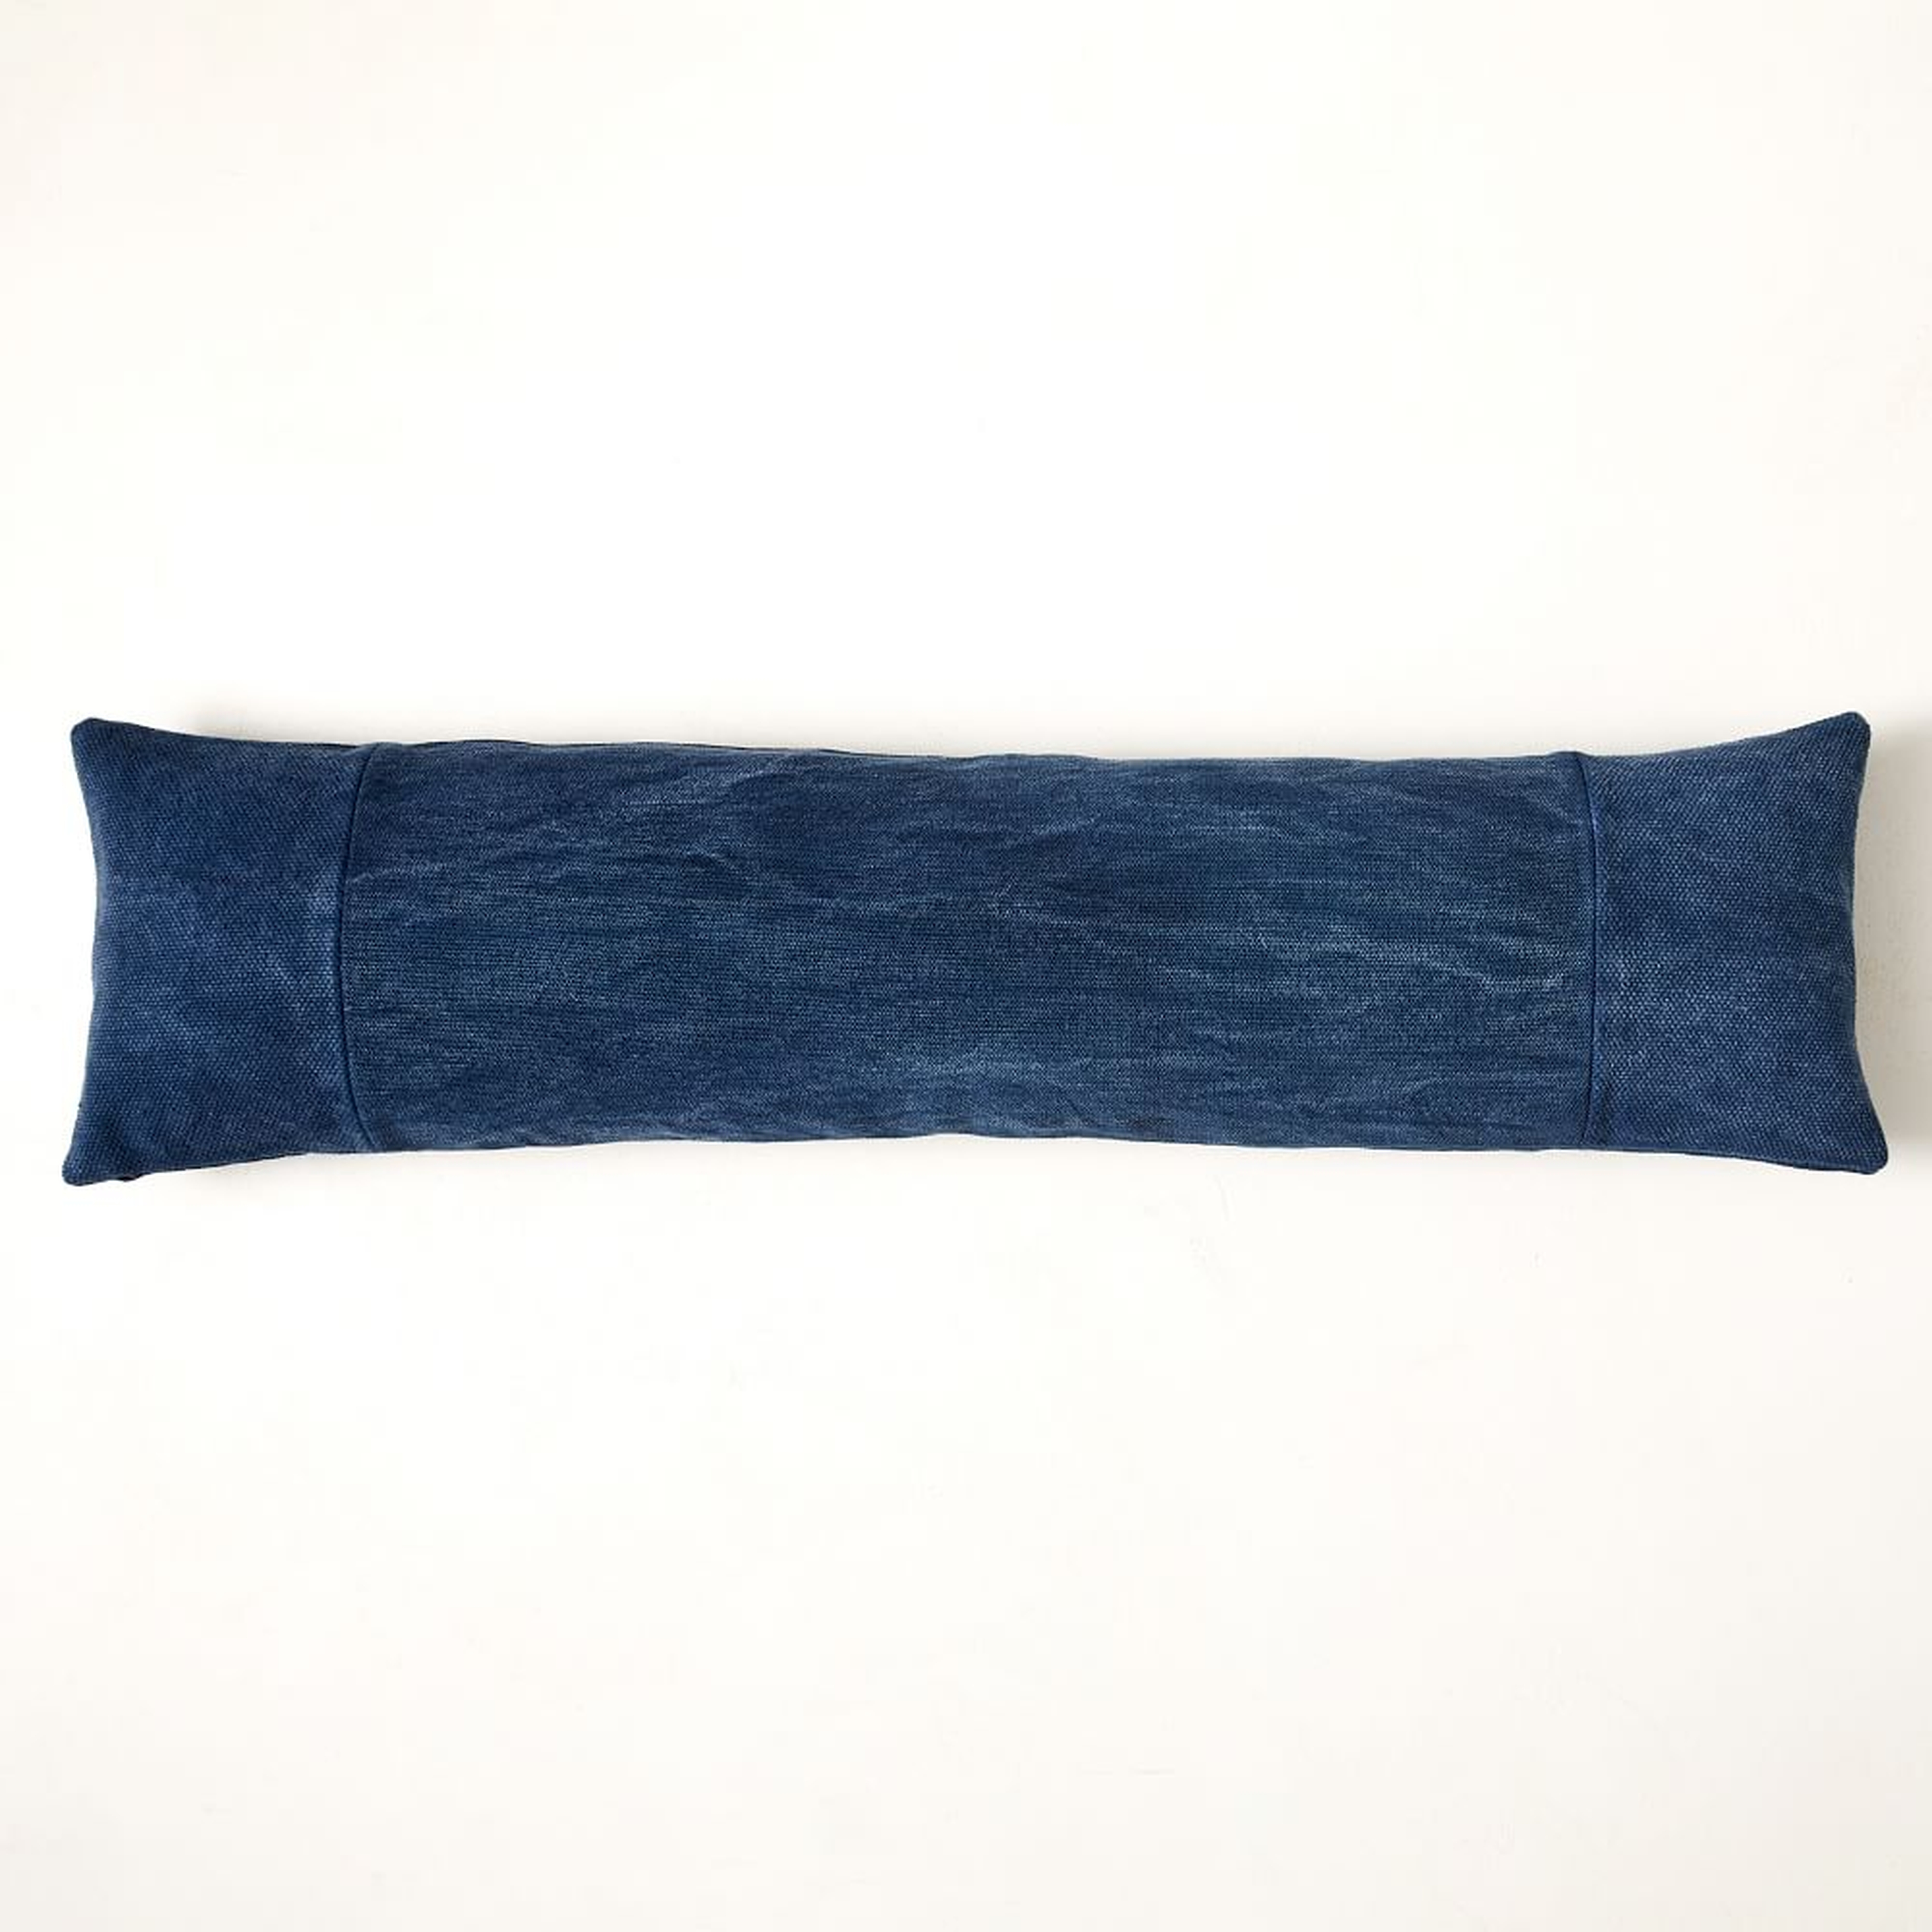 Cotton Canvas Pillow Cover, 12"x46", Midnight - West Elm